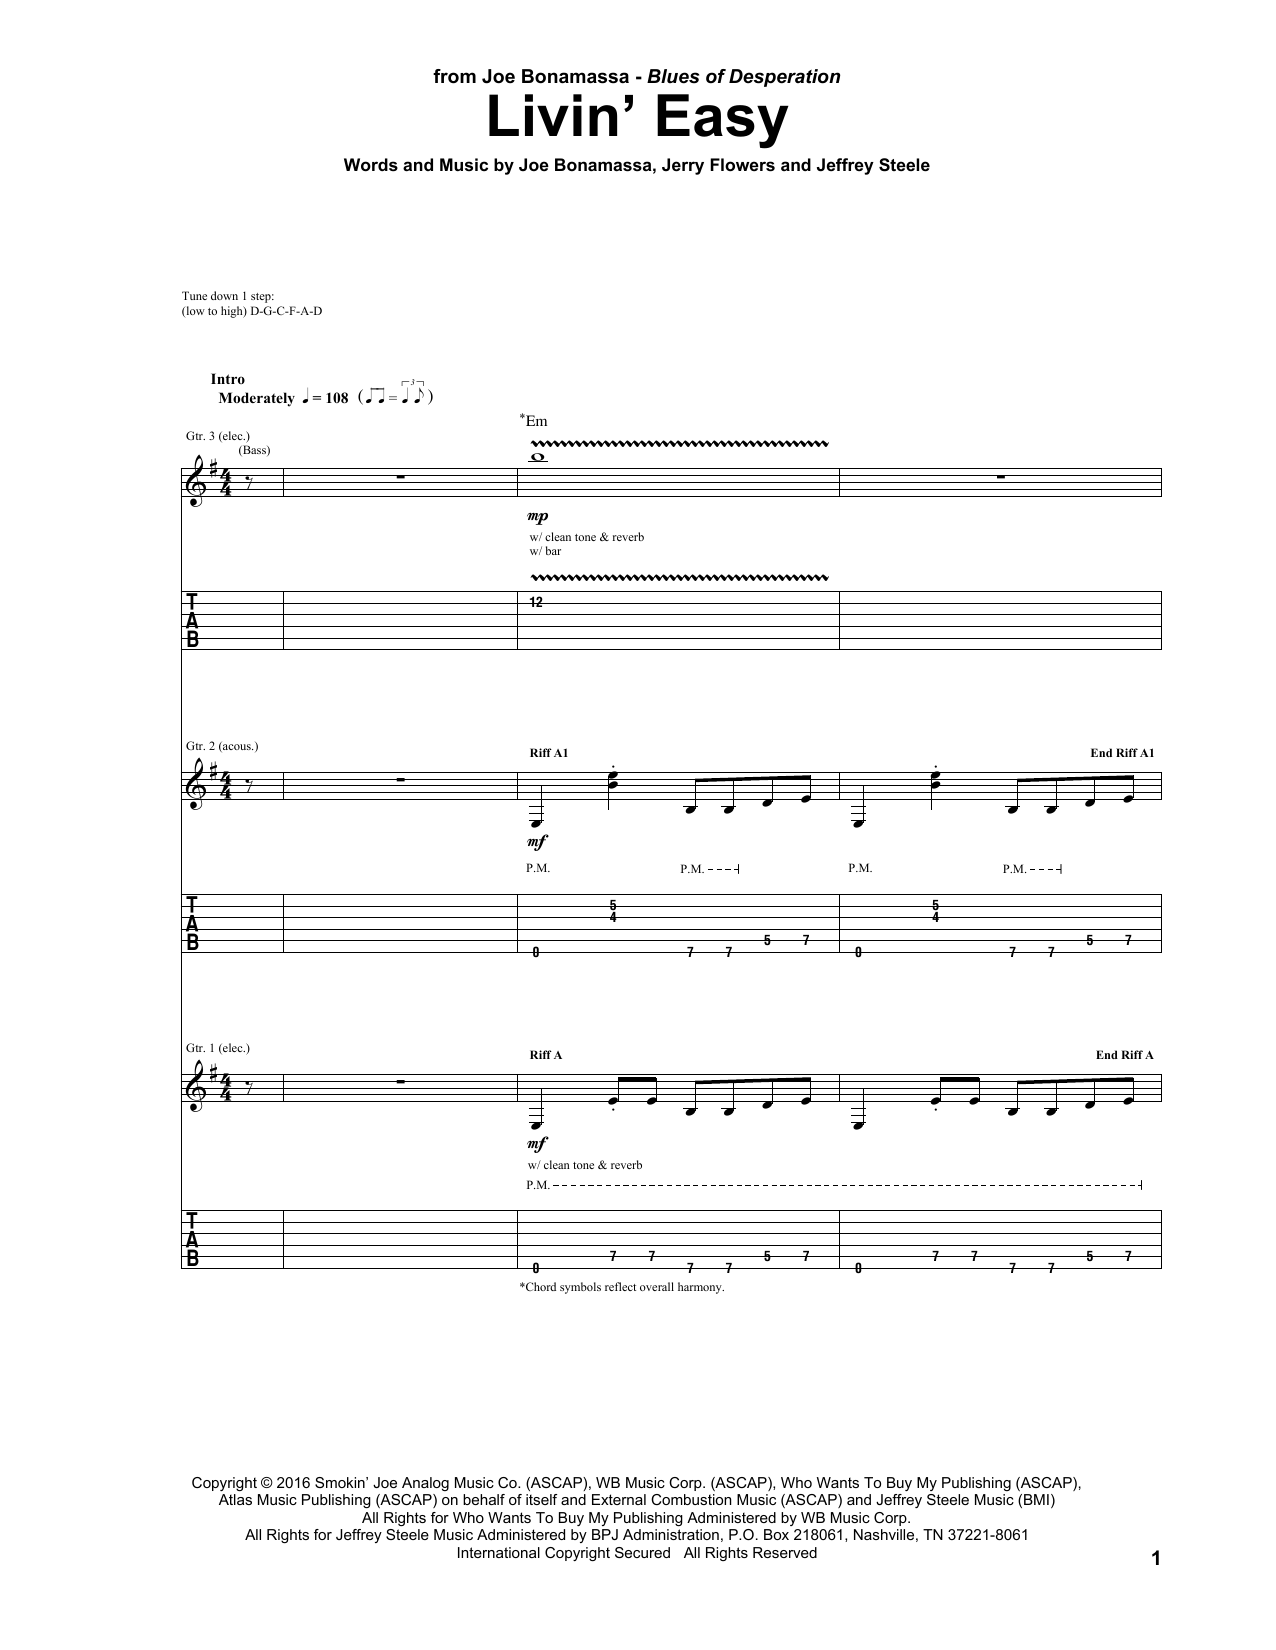 Download Joe Bonamassa Livin' Easy Sheet Music and learn how to play Guitar Tab PDF digital score in minutes